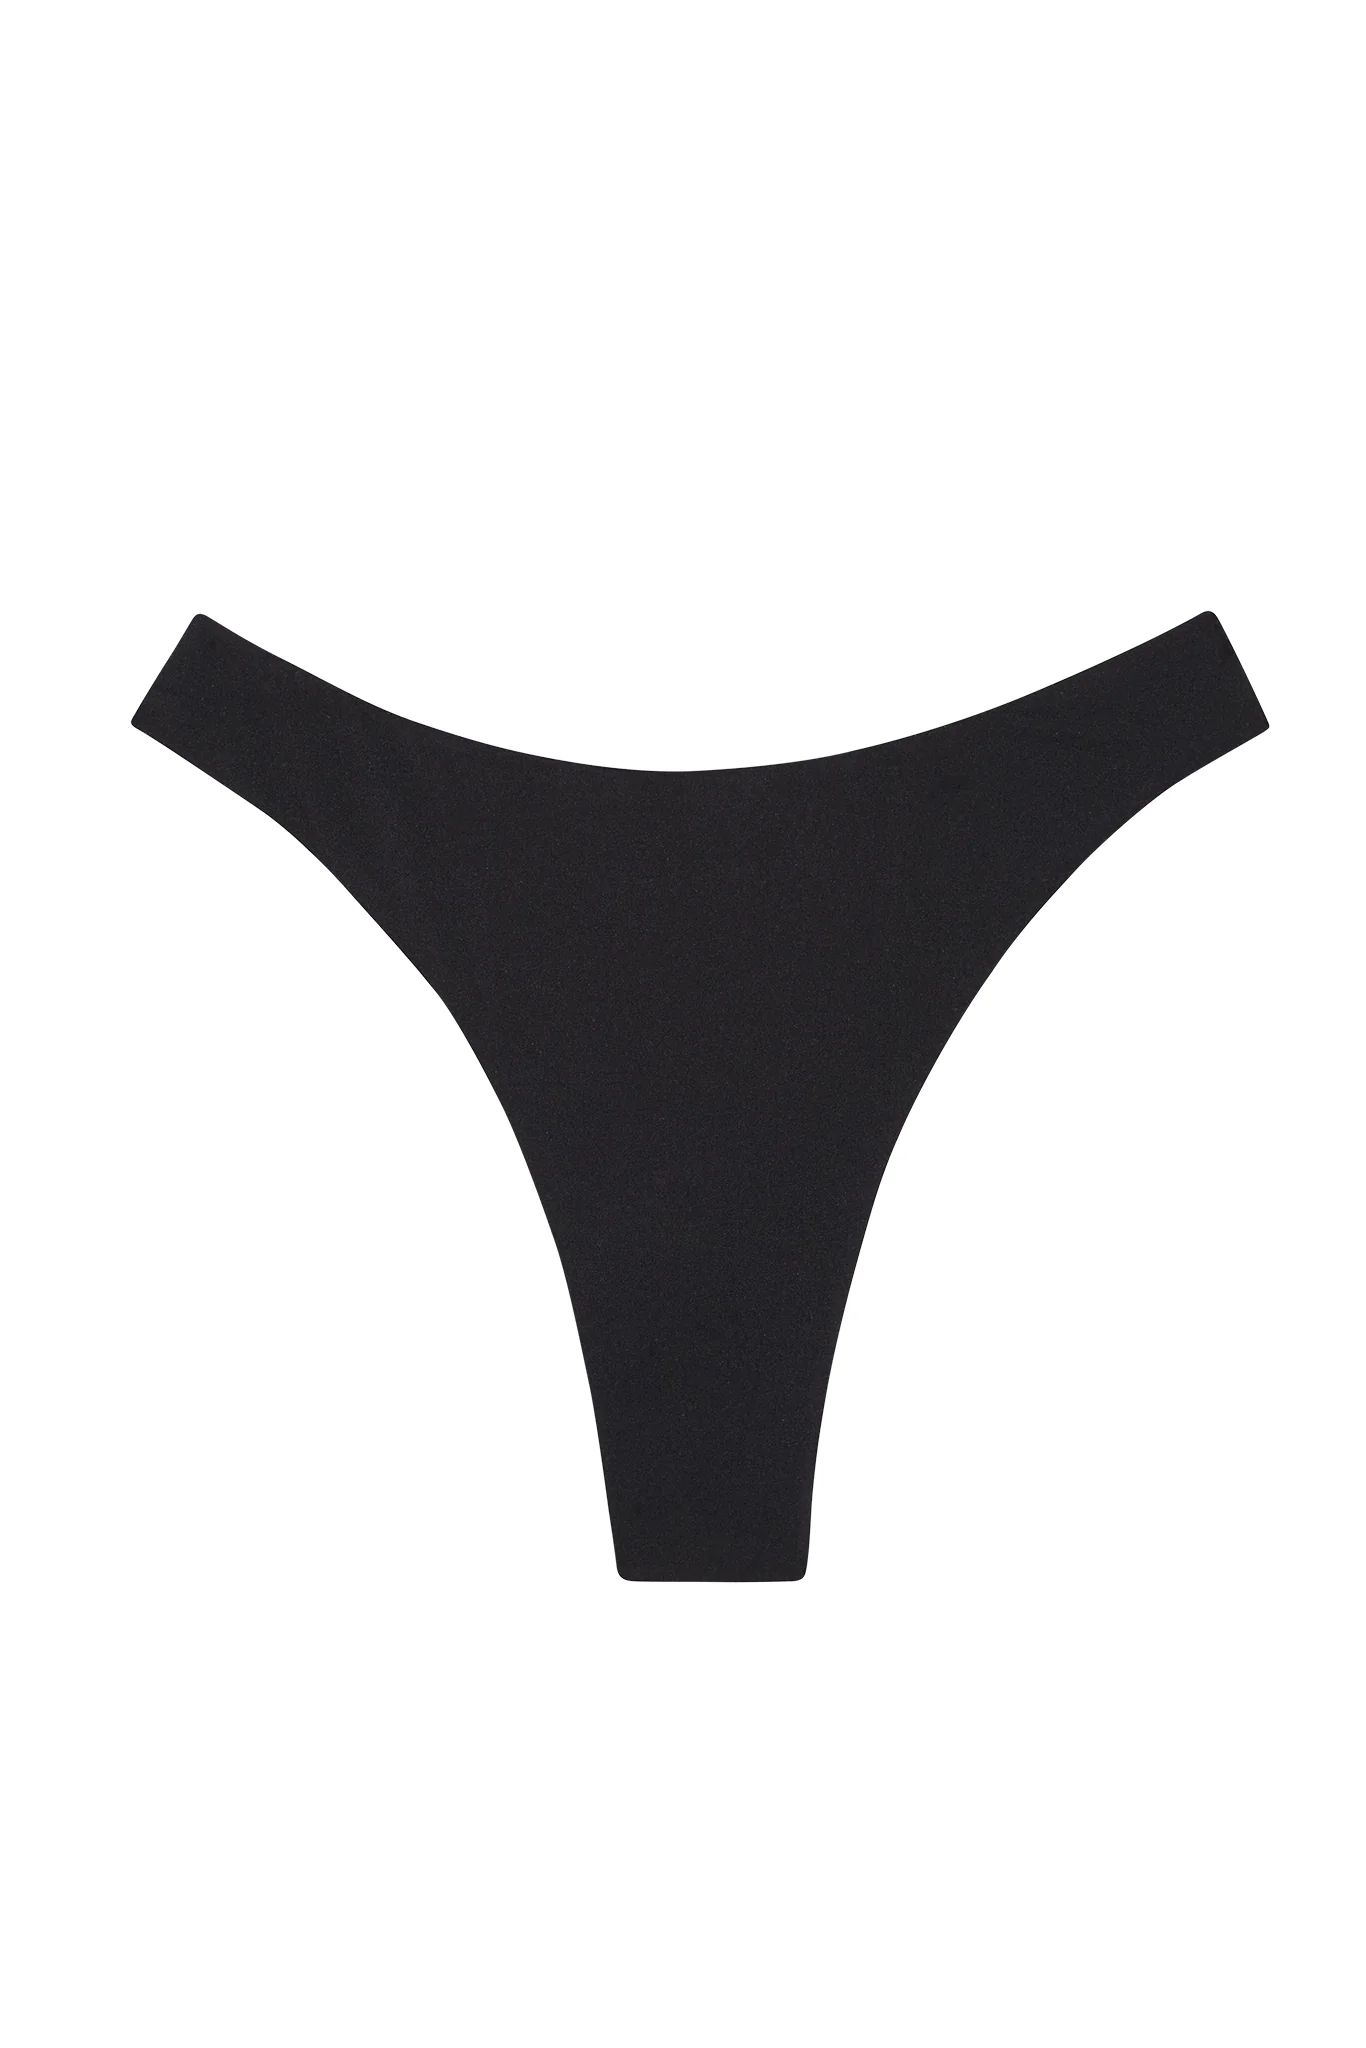 Capri Thong - Black | Monday Swimwear